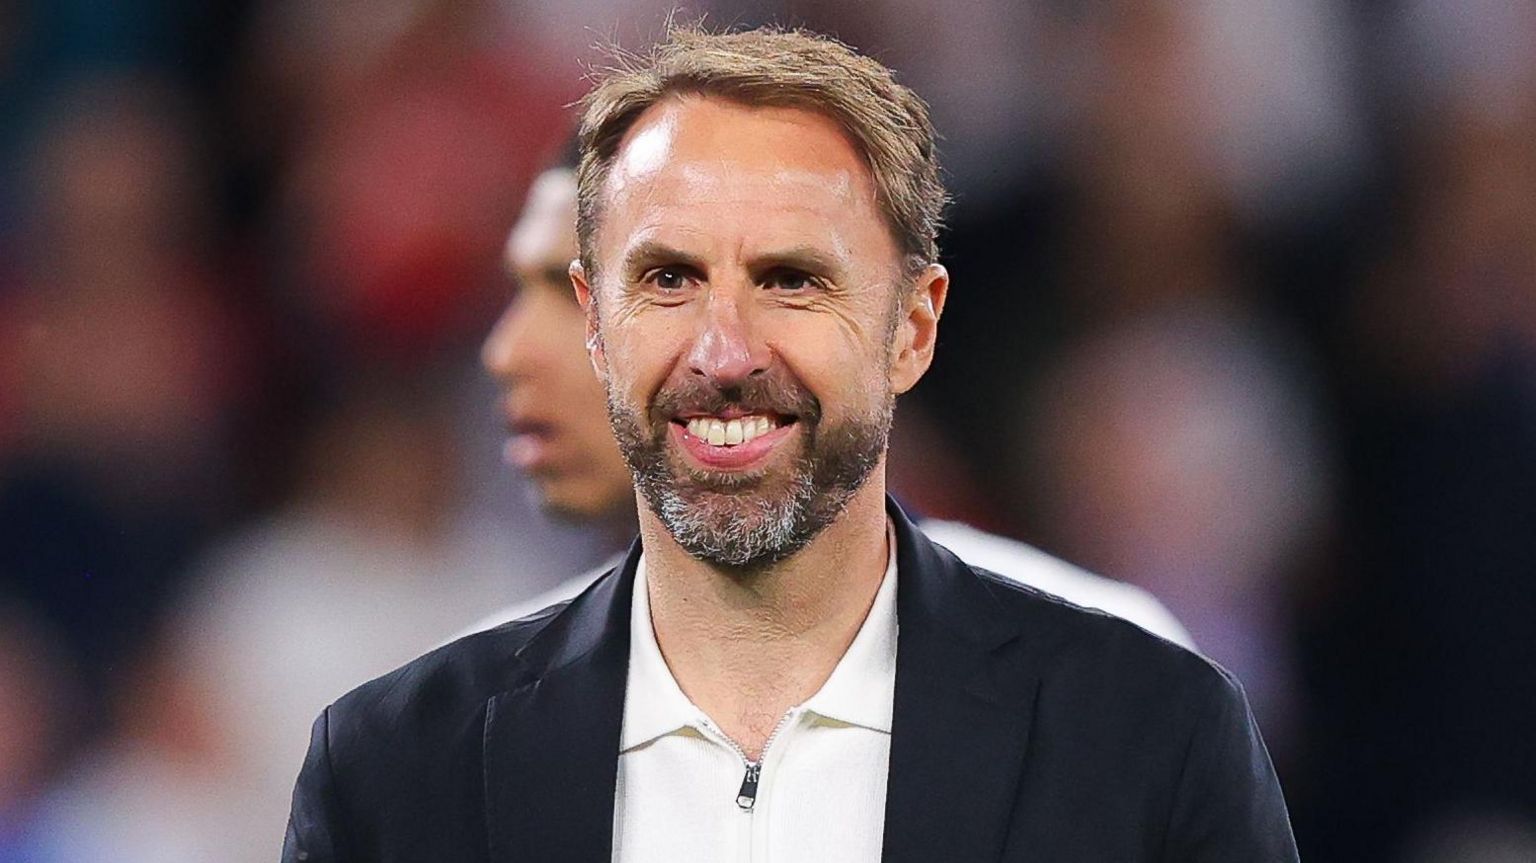 Photo of England manager Gareth Southgate smiling